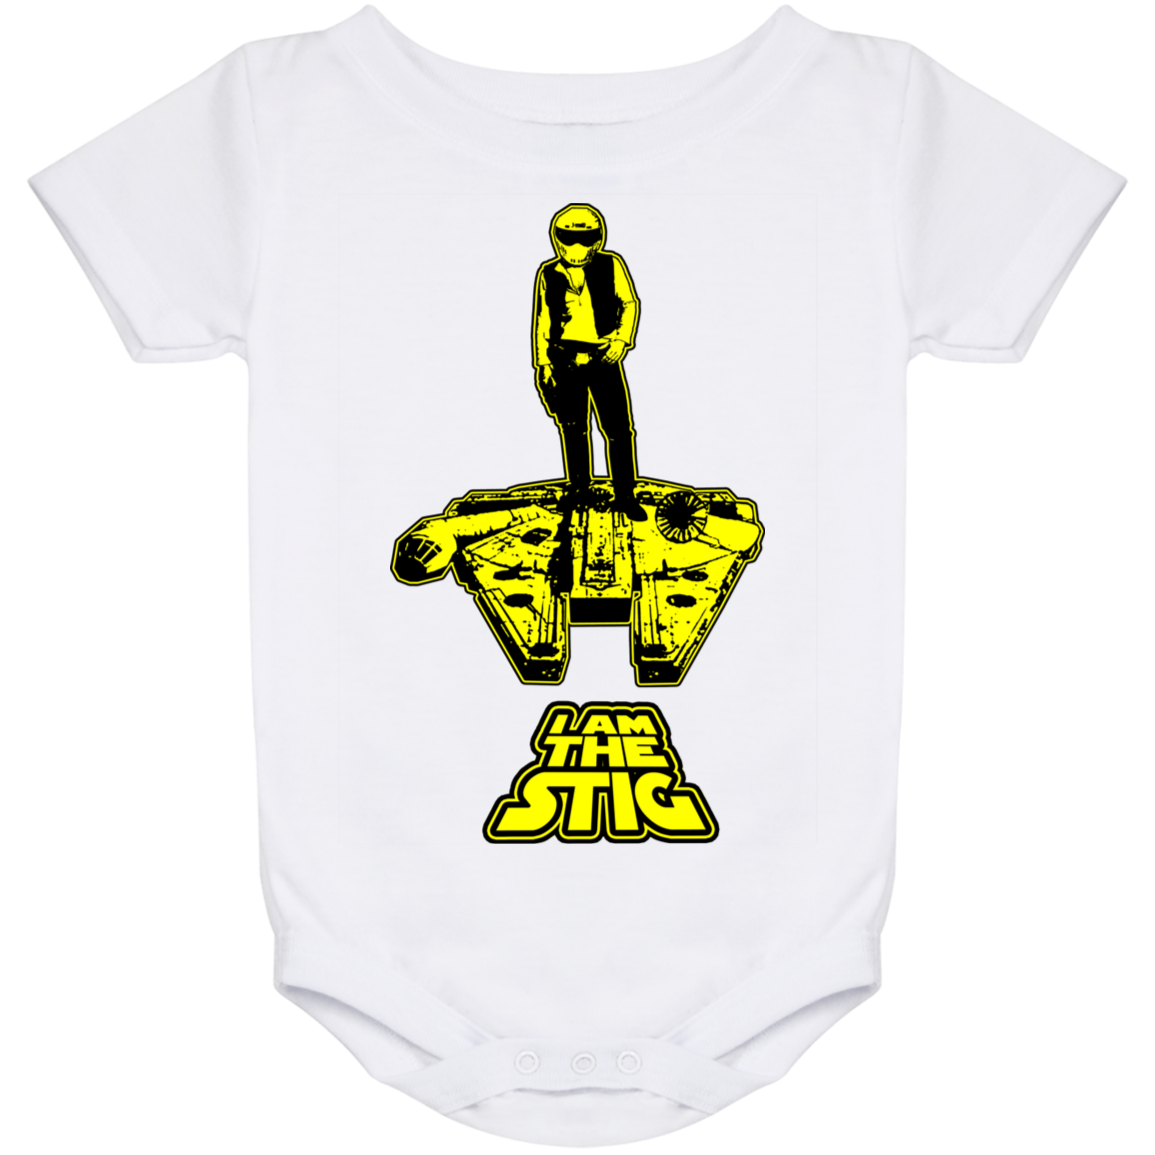 ArtichokeUSA Custom Design. I am the Stig. Han Solo / The Stig Fan Art. Baby Onesie 24 Month